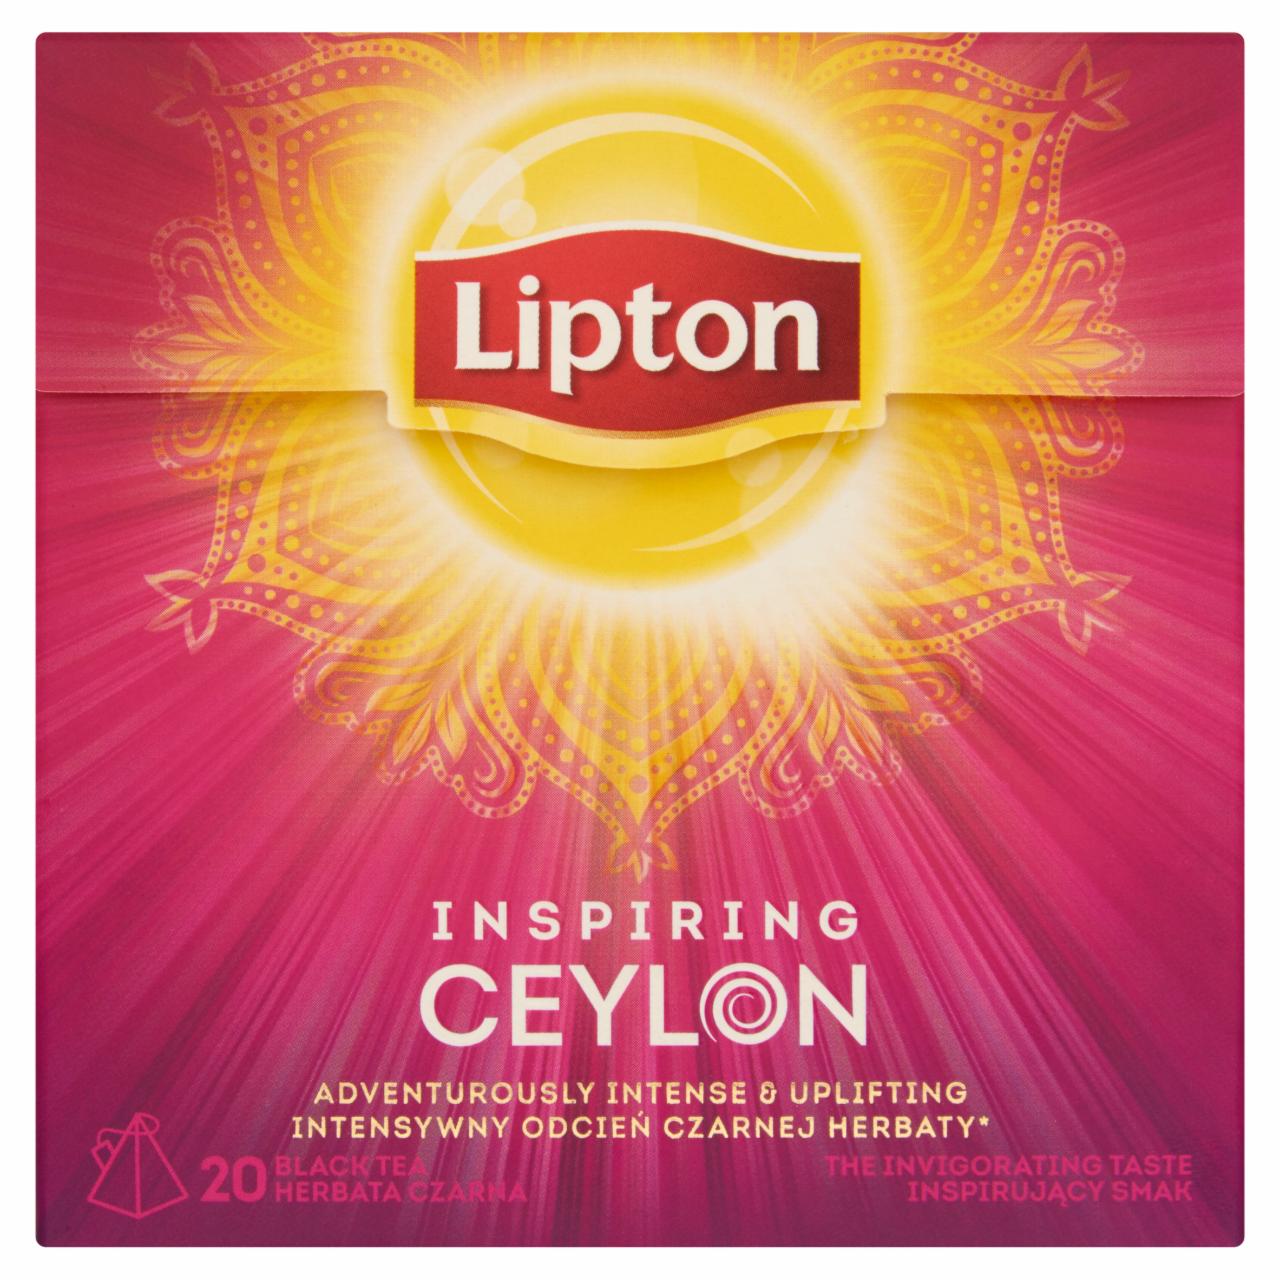 Képek - Lipton Inspiring Ceylon fekete tea 20 piramis filter